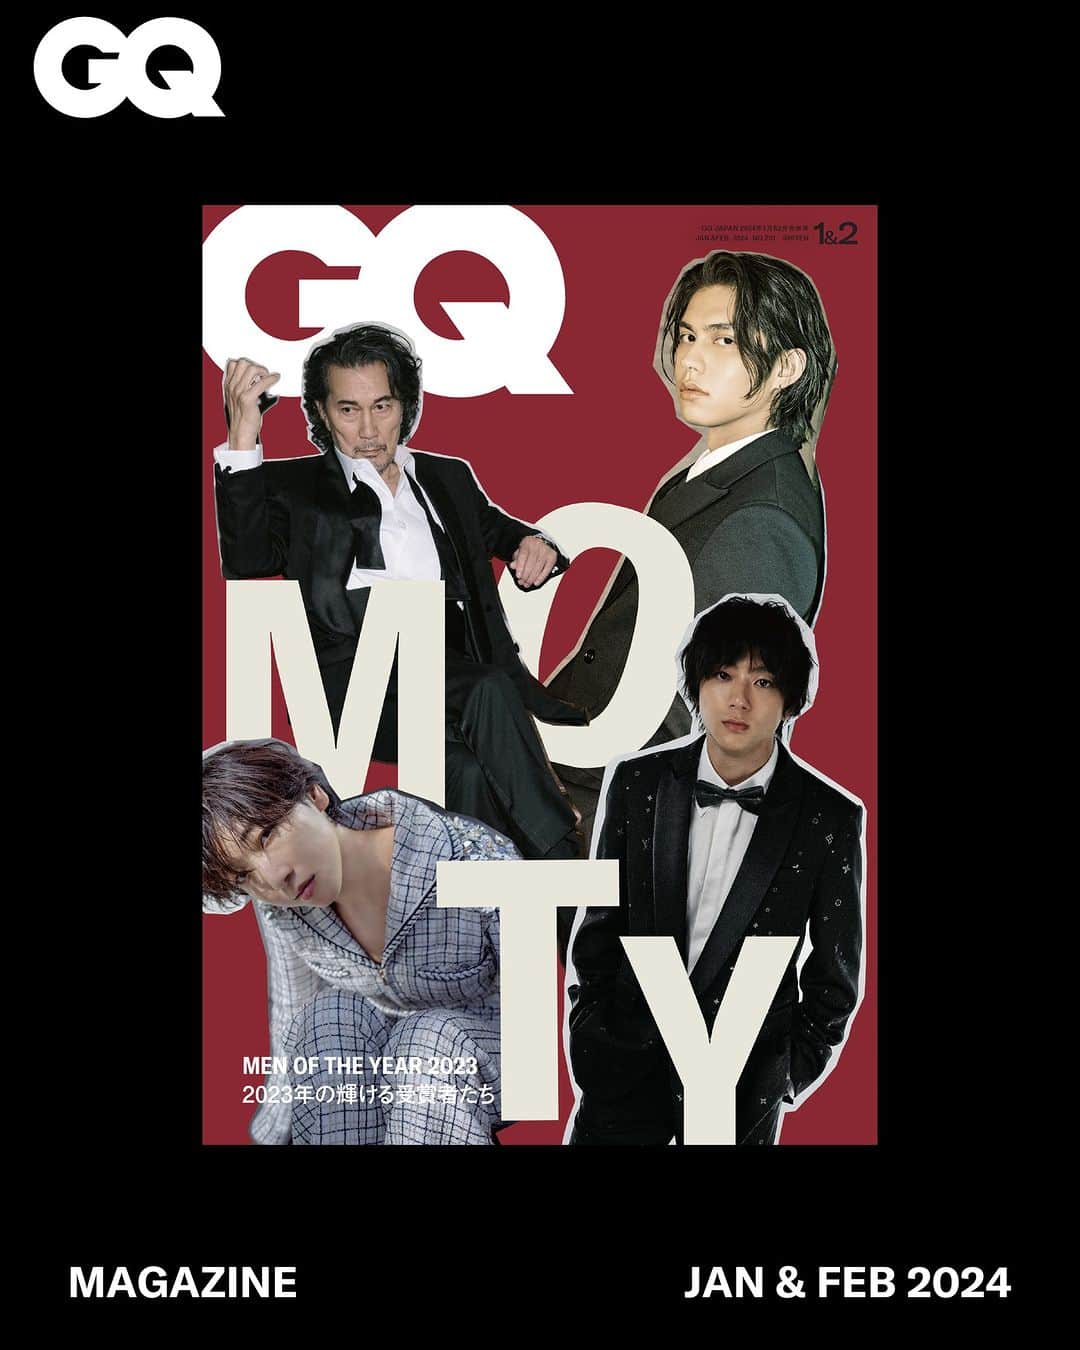 GQ JAPANのインスタグラム：「【表紙解禁（1・2月合併号）】 12月1日発売の『GQ JAPAN』1月&2月合併号は、「GQ MEN OF THE YEAR 2023」号！表紙は3パターン！  今年もっとも輝いた受賞者たちを写真とインタビューで大特集。  詳細は @gqjapan プロフィールのリンクから✓  ※表紙は3種類（GQ JAPAN 1・2月合併号、GQ JAPAN 1月号 増刊特別表紙版、GQ JAPAN 2月号 増刊特別表紙版）あり、それぞれに1面に登場する受賞者が異なります。  #GQJP_MOTY #GQMOTY #役所広司 #kojiyakusho #安藤サクラ #sakuraando #山田裕貴 #yukiyamada #MrsGREENAPPLE #久石譲 #joehisaishi #吉田正尚 #masatakayoshida #新しい学校のリーダーズ #atarashiigakko #ヒコロヒー #hiccorohee #BRIGHT #bbrightvc #ブライト #ラーズヌートバー #ヌートバー #LarsNootbaar   @sakuraando @00_yuki_y @mgaband @motoki_ohmori_mga @hiloto_wakai_mga @ryoka_fujisawa_mga @joehisaishi.official @bh_masataka34 @japan_leaders @suzuka_leaders @kanon_leaders @mizyu_leaders @rin_leaders @hiccorohee @bbrightvc @lars_nootbaar11」